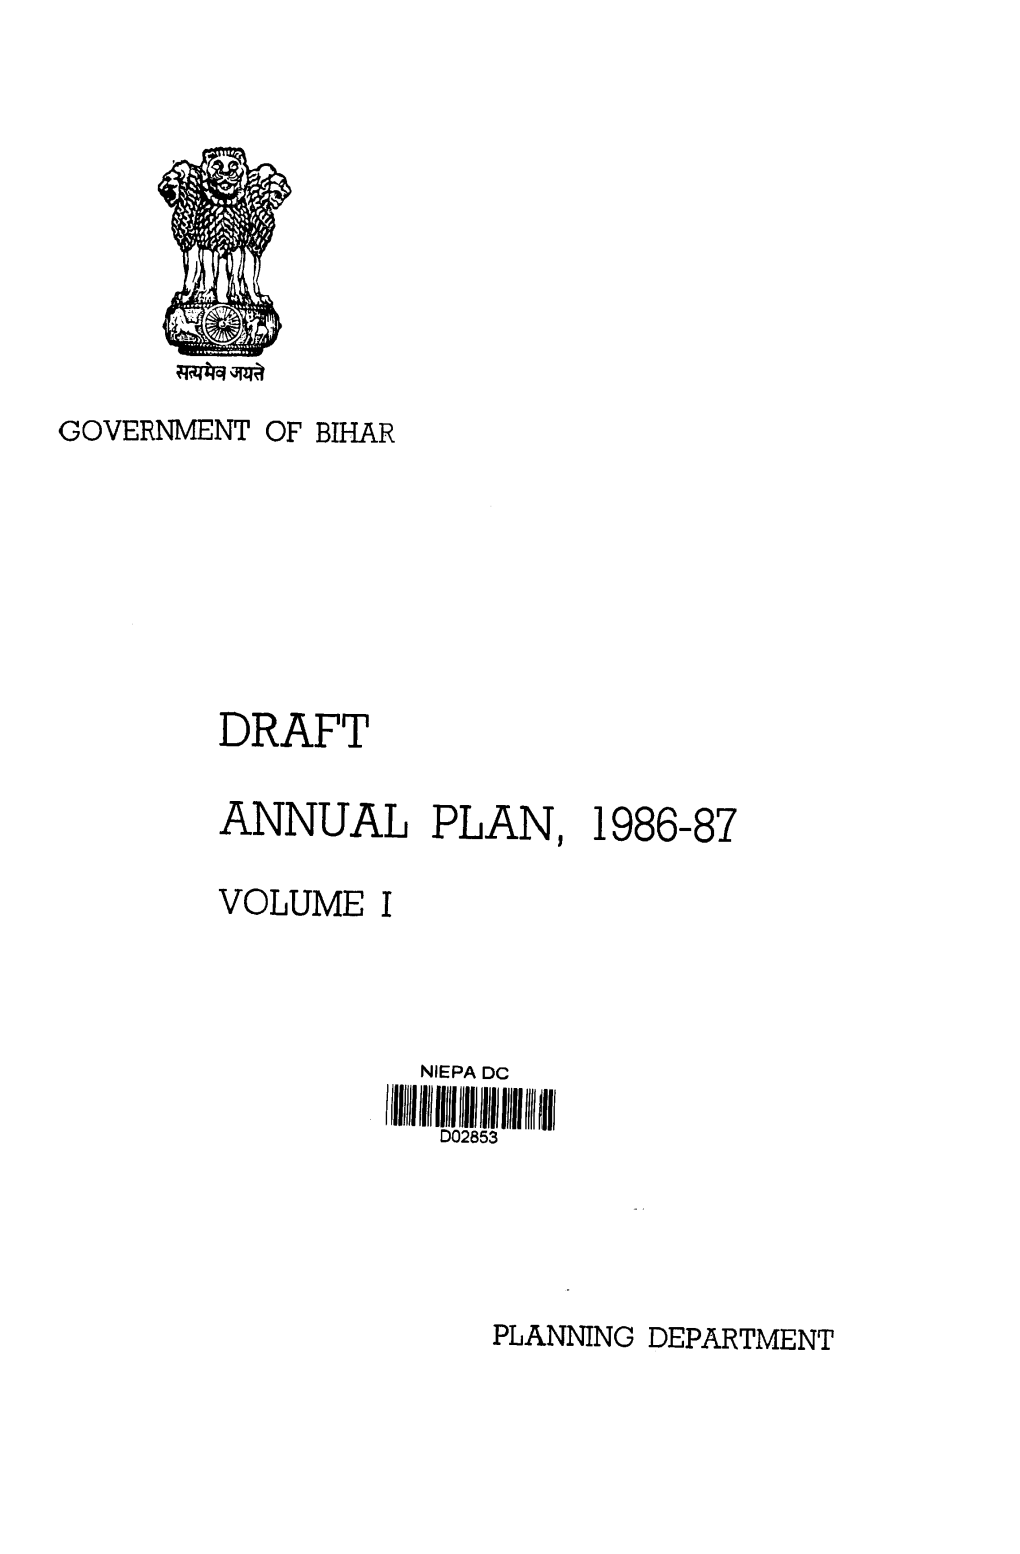 Draft Annual Plan, 1986-87